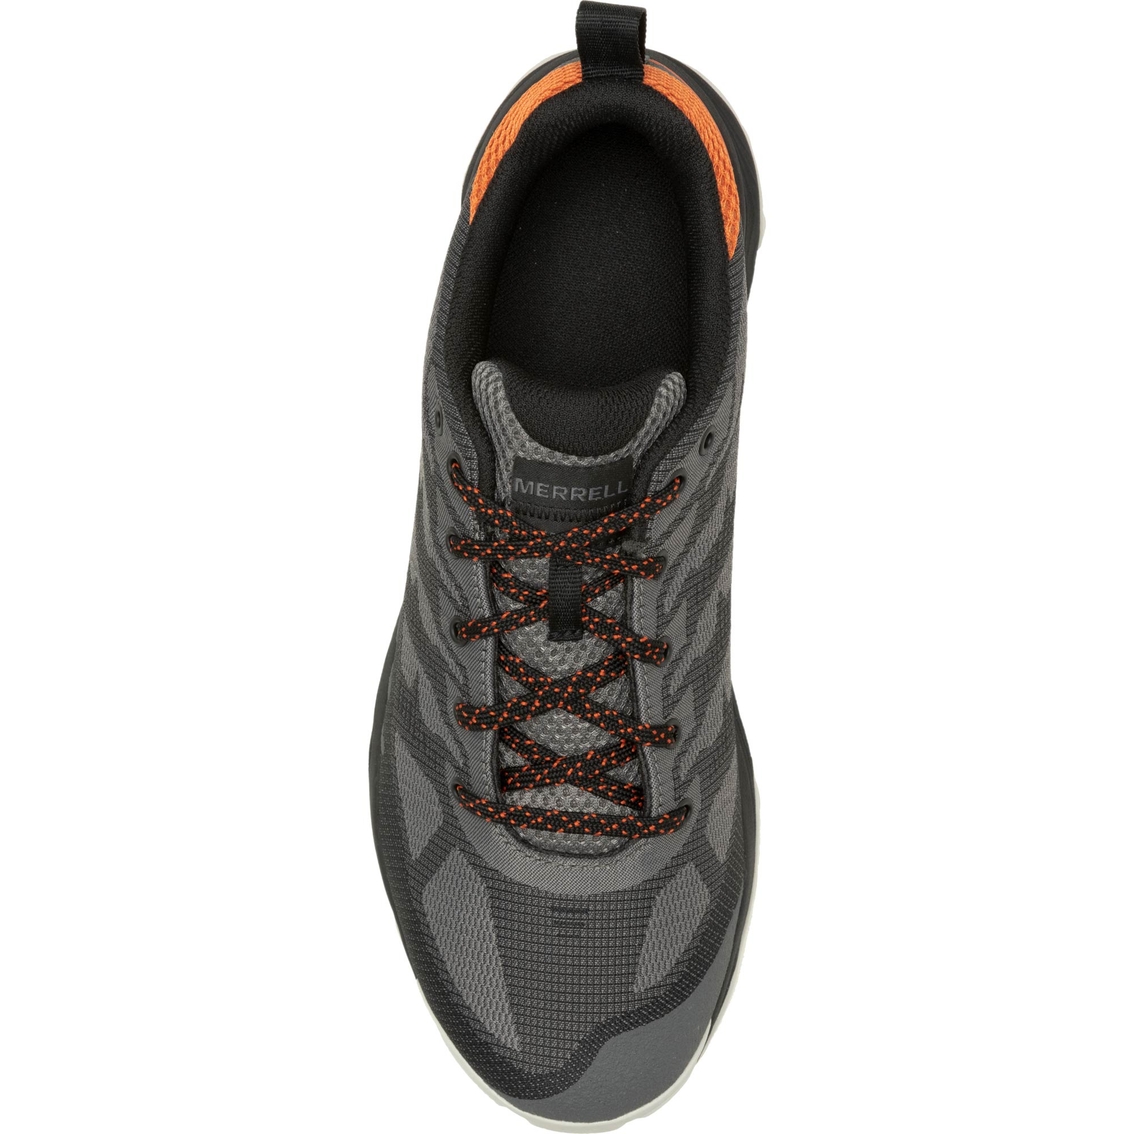 Merrell Men's Speed Eco Sneakers, Charcoal - Image 5 of 6